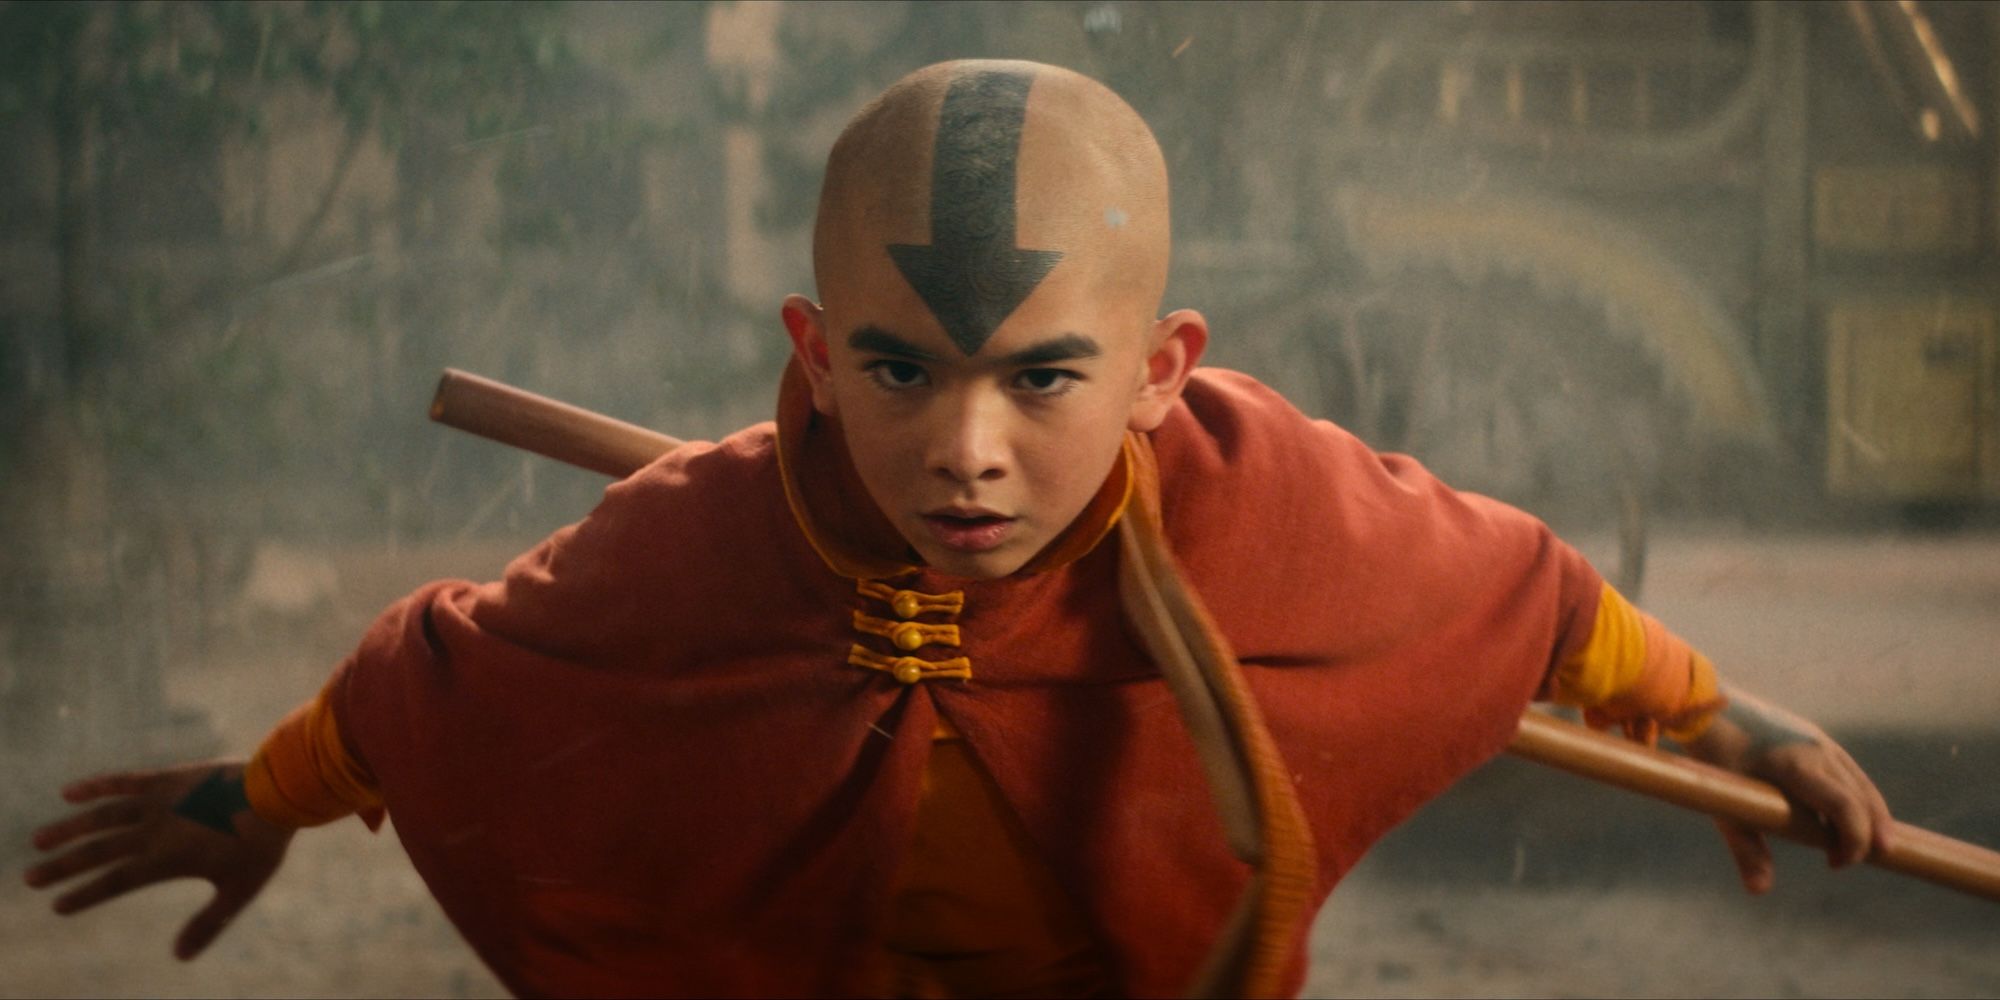 Aang prepares to fight in Avatar The Last Airbender series